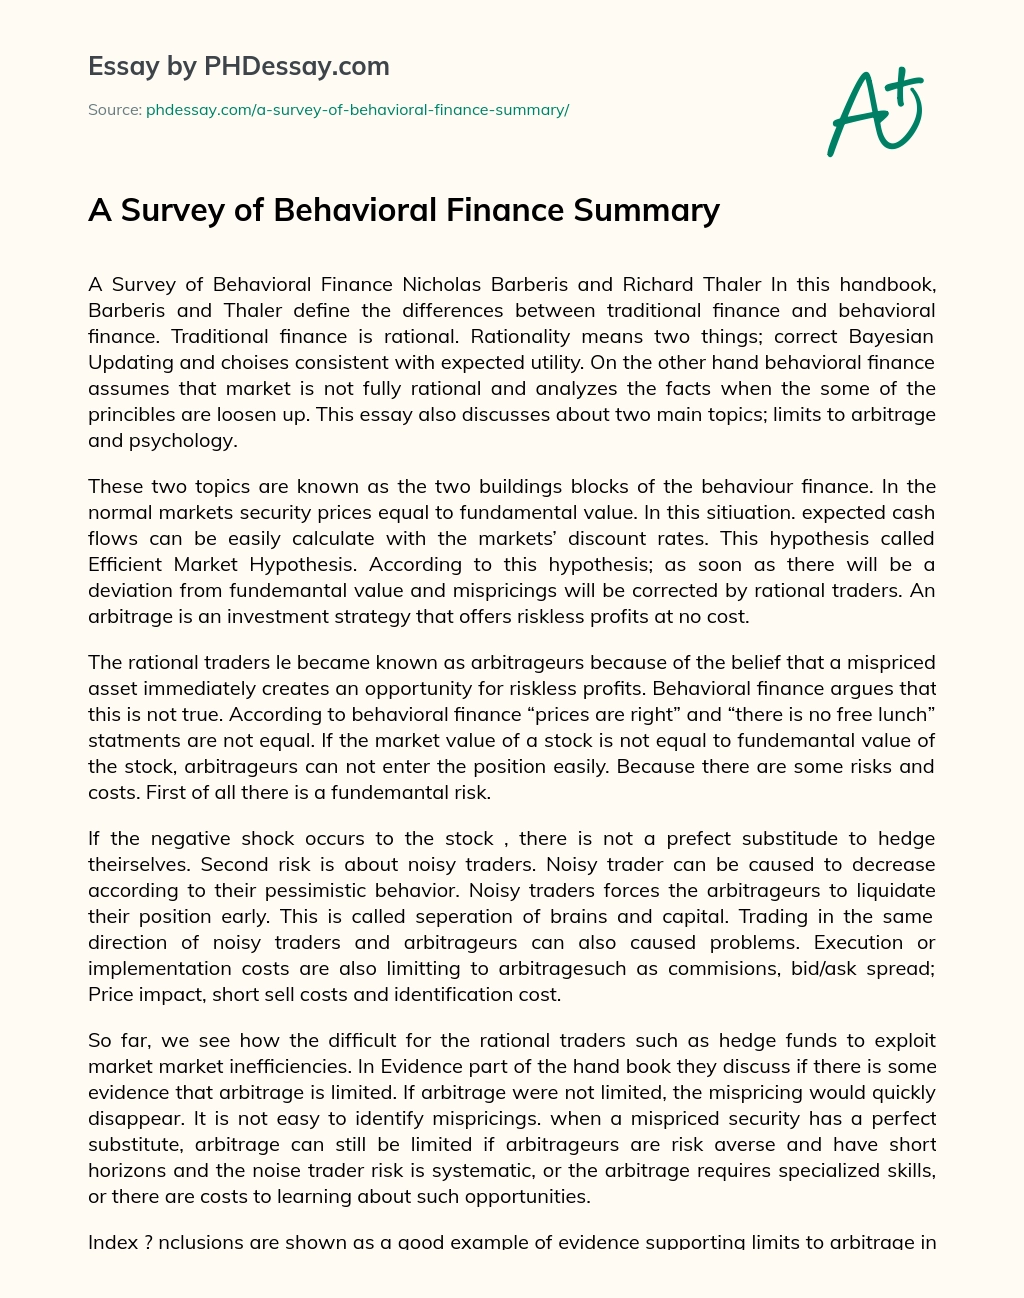 A Survey of Behavioral Finance Summary essay